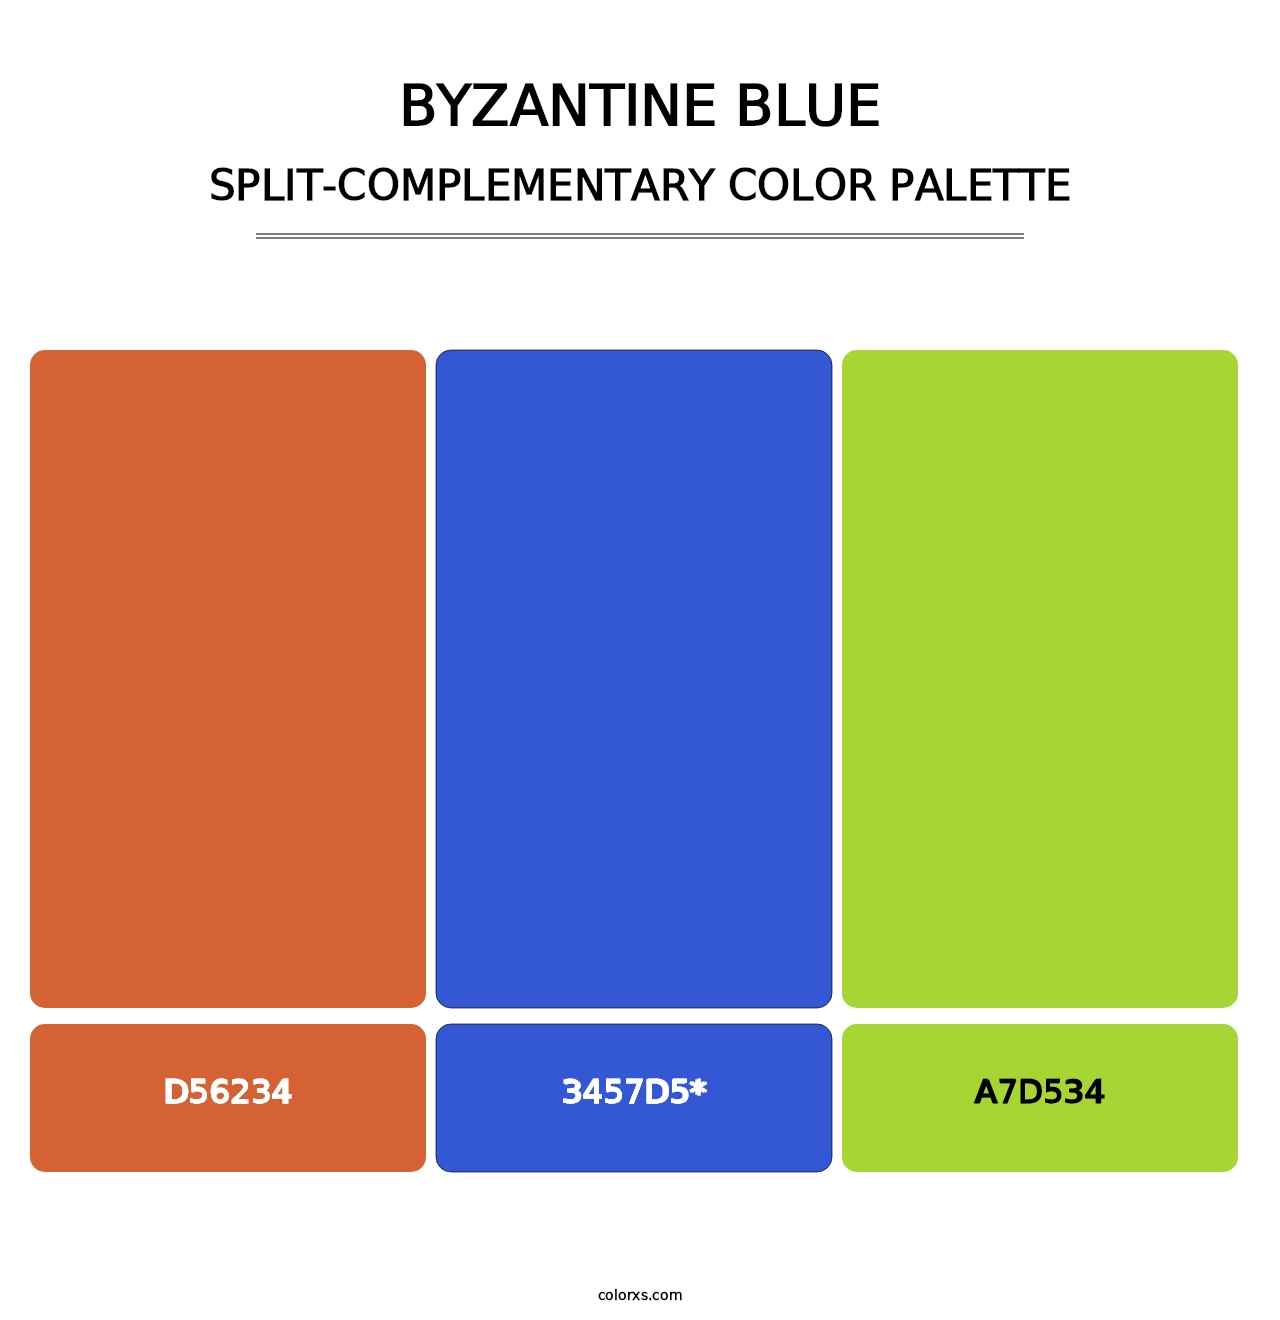 Byzantine Blue - Split-Complementary Color Palette